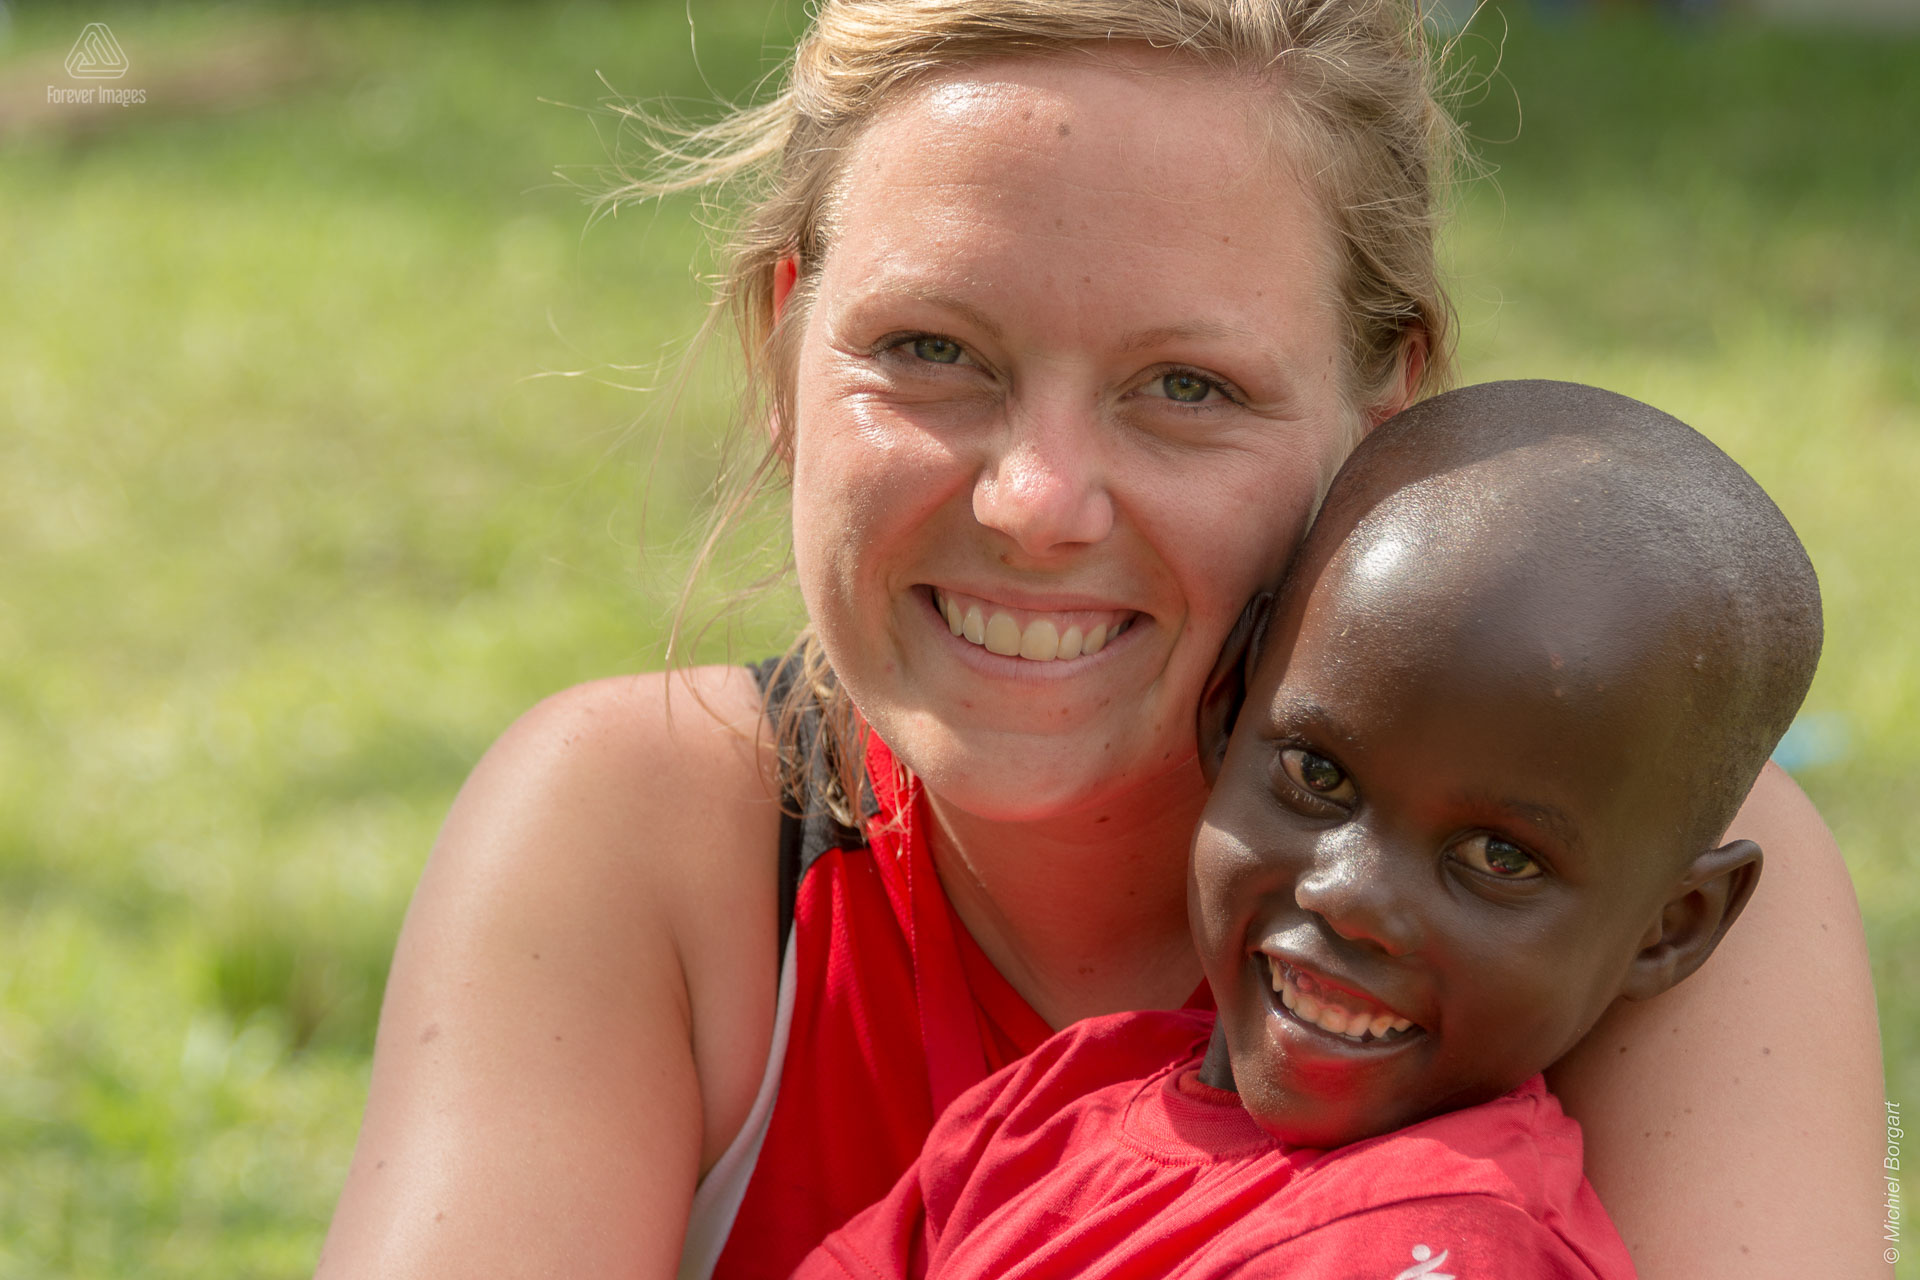 Portretfoto jonge dame en Compassion sponsorkindje in Oeganda Muskathlon van 2015 | Lotte Abrahams | Portretfotograaf Michiel Borgart - Forever Images.